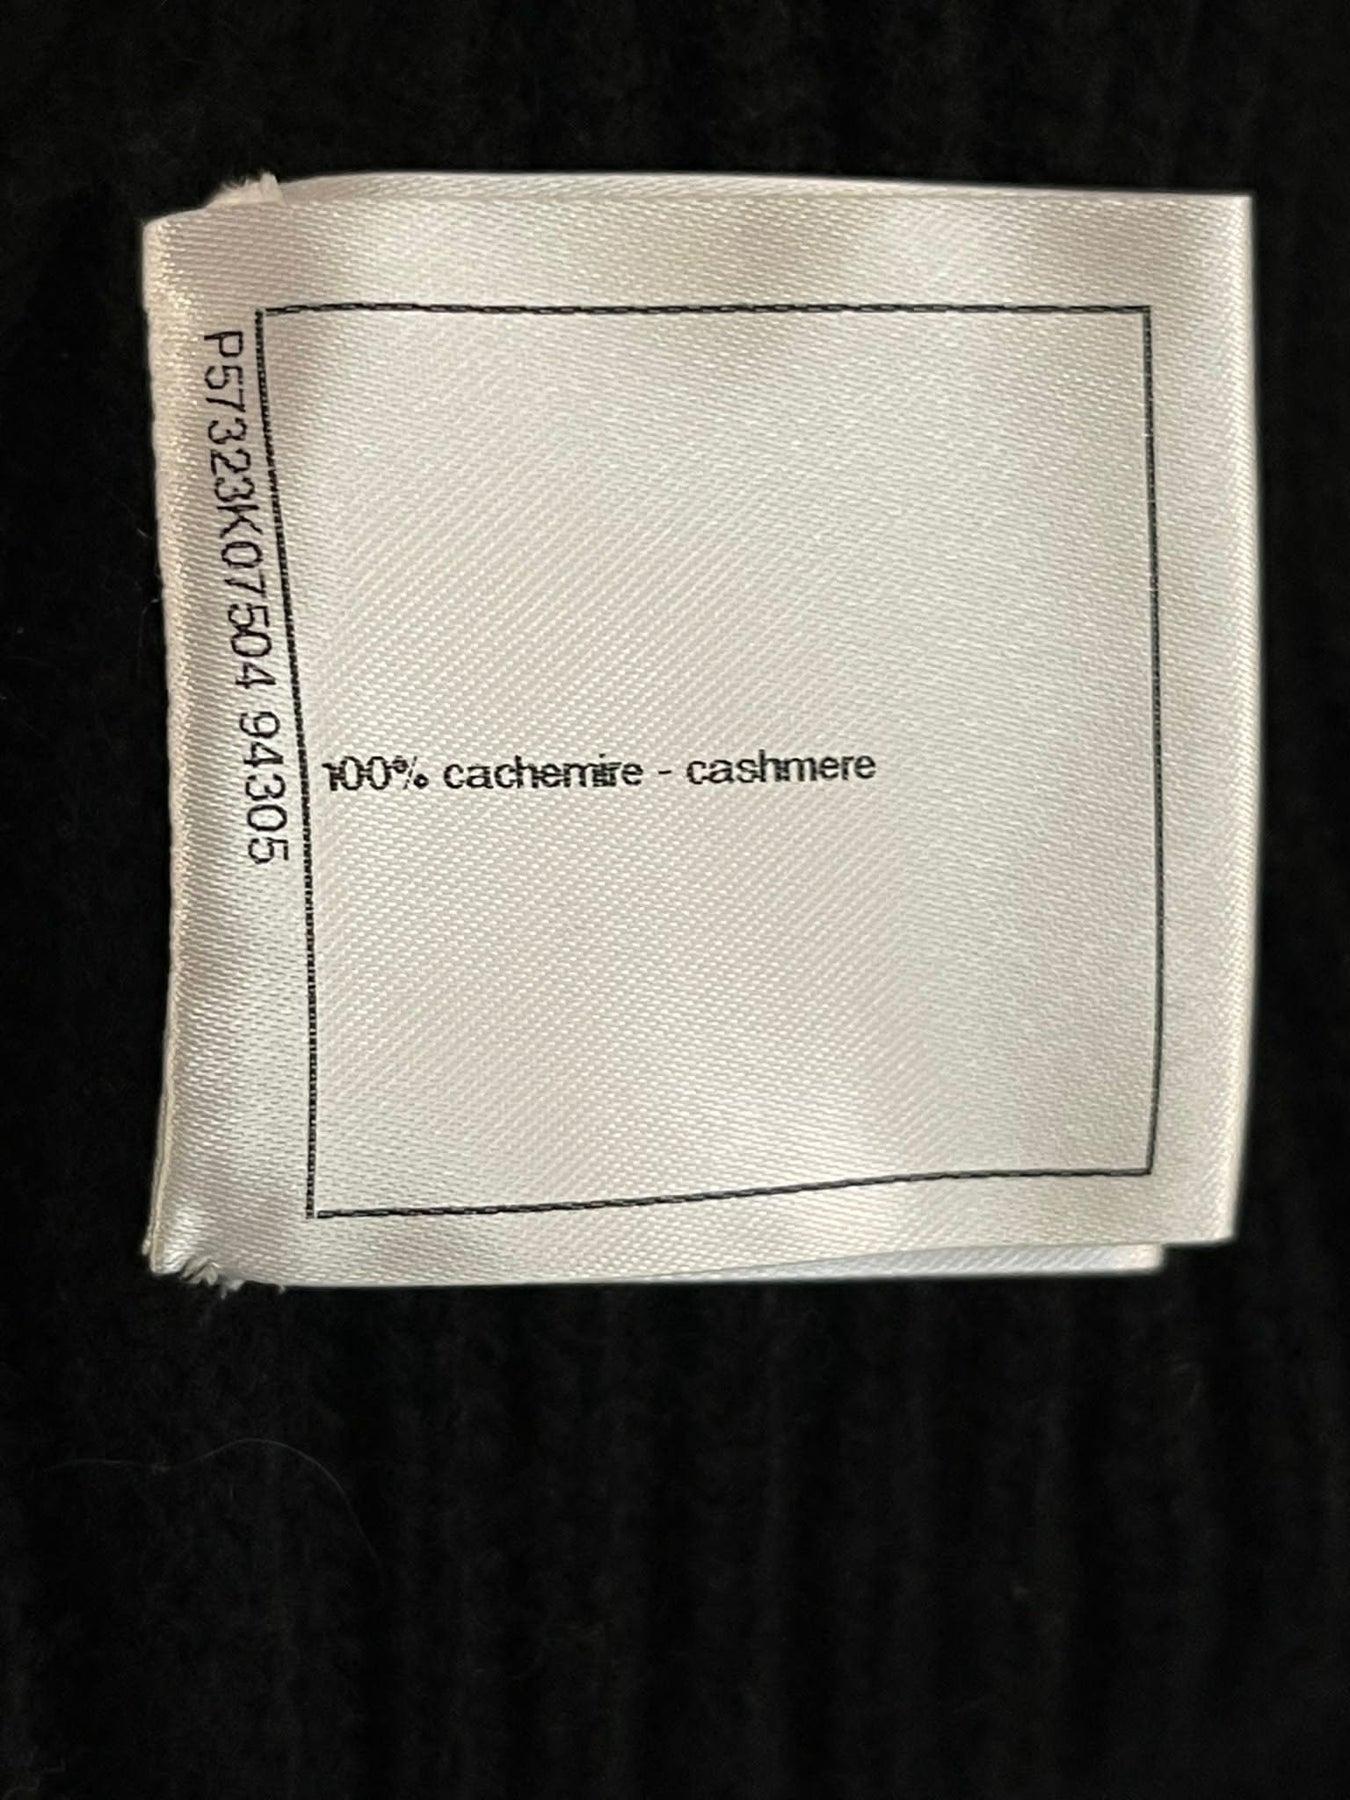 Chanel Cashmere Gabrielle Coco Cardi/Coat For Sale 5